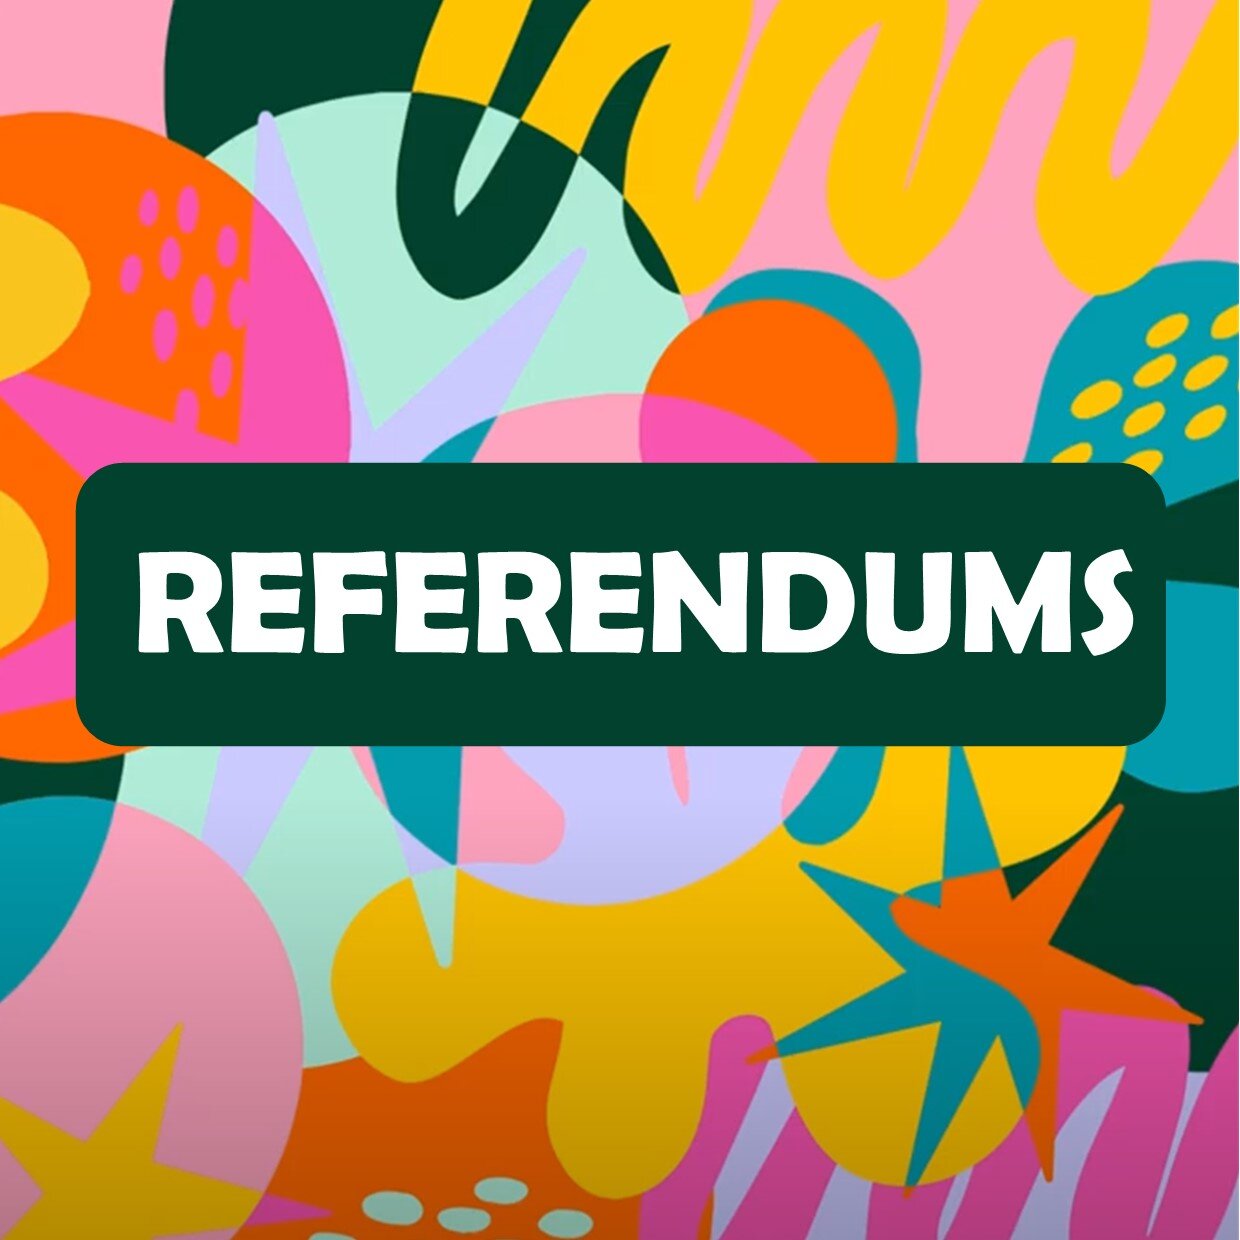 Referendum Information